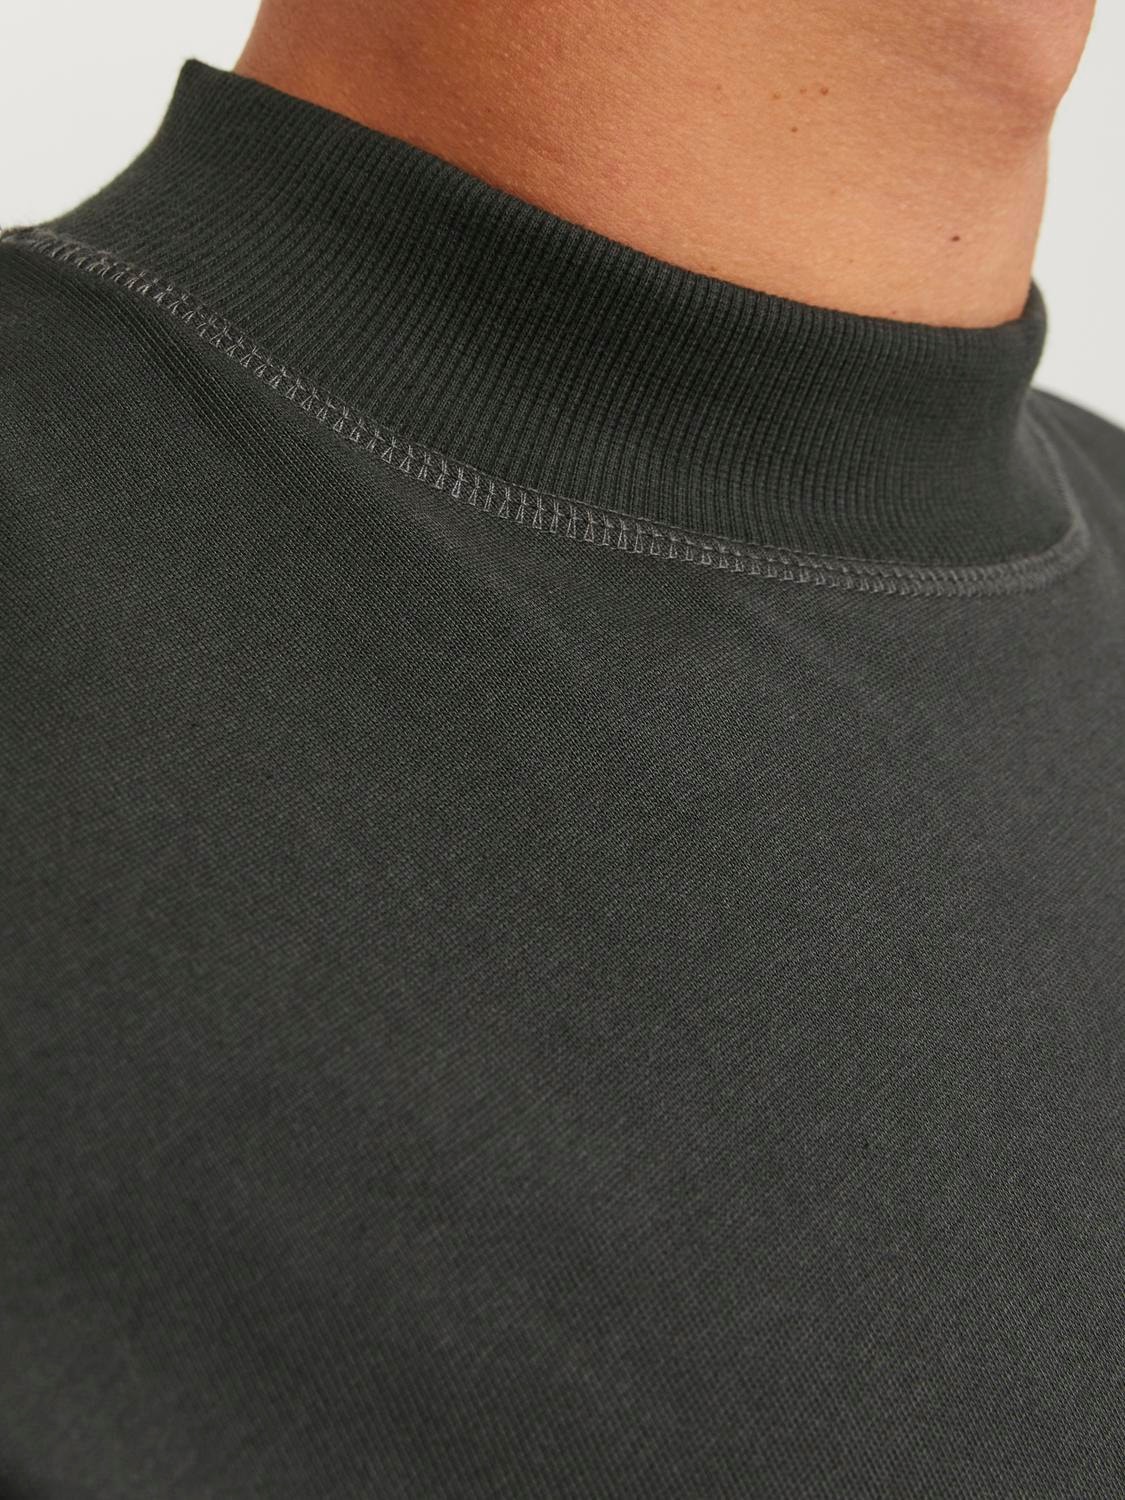 Jack & Jones Plain Crewn Neck Sweatshirt -Black Sand - 12247596